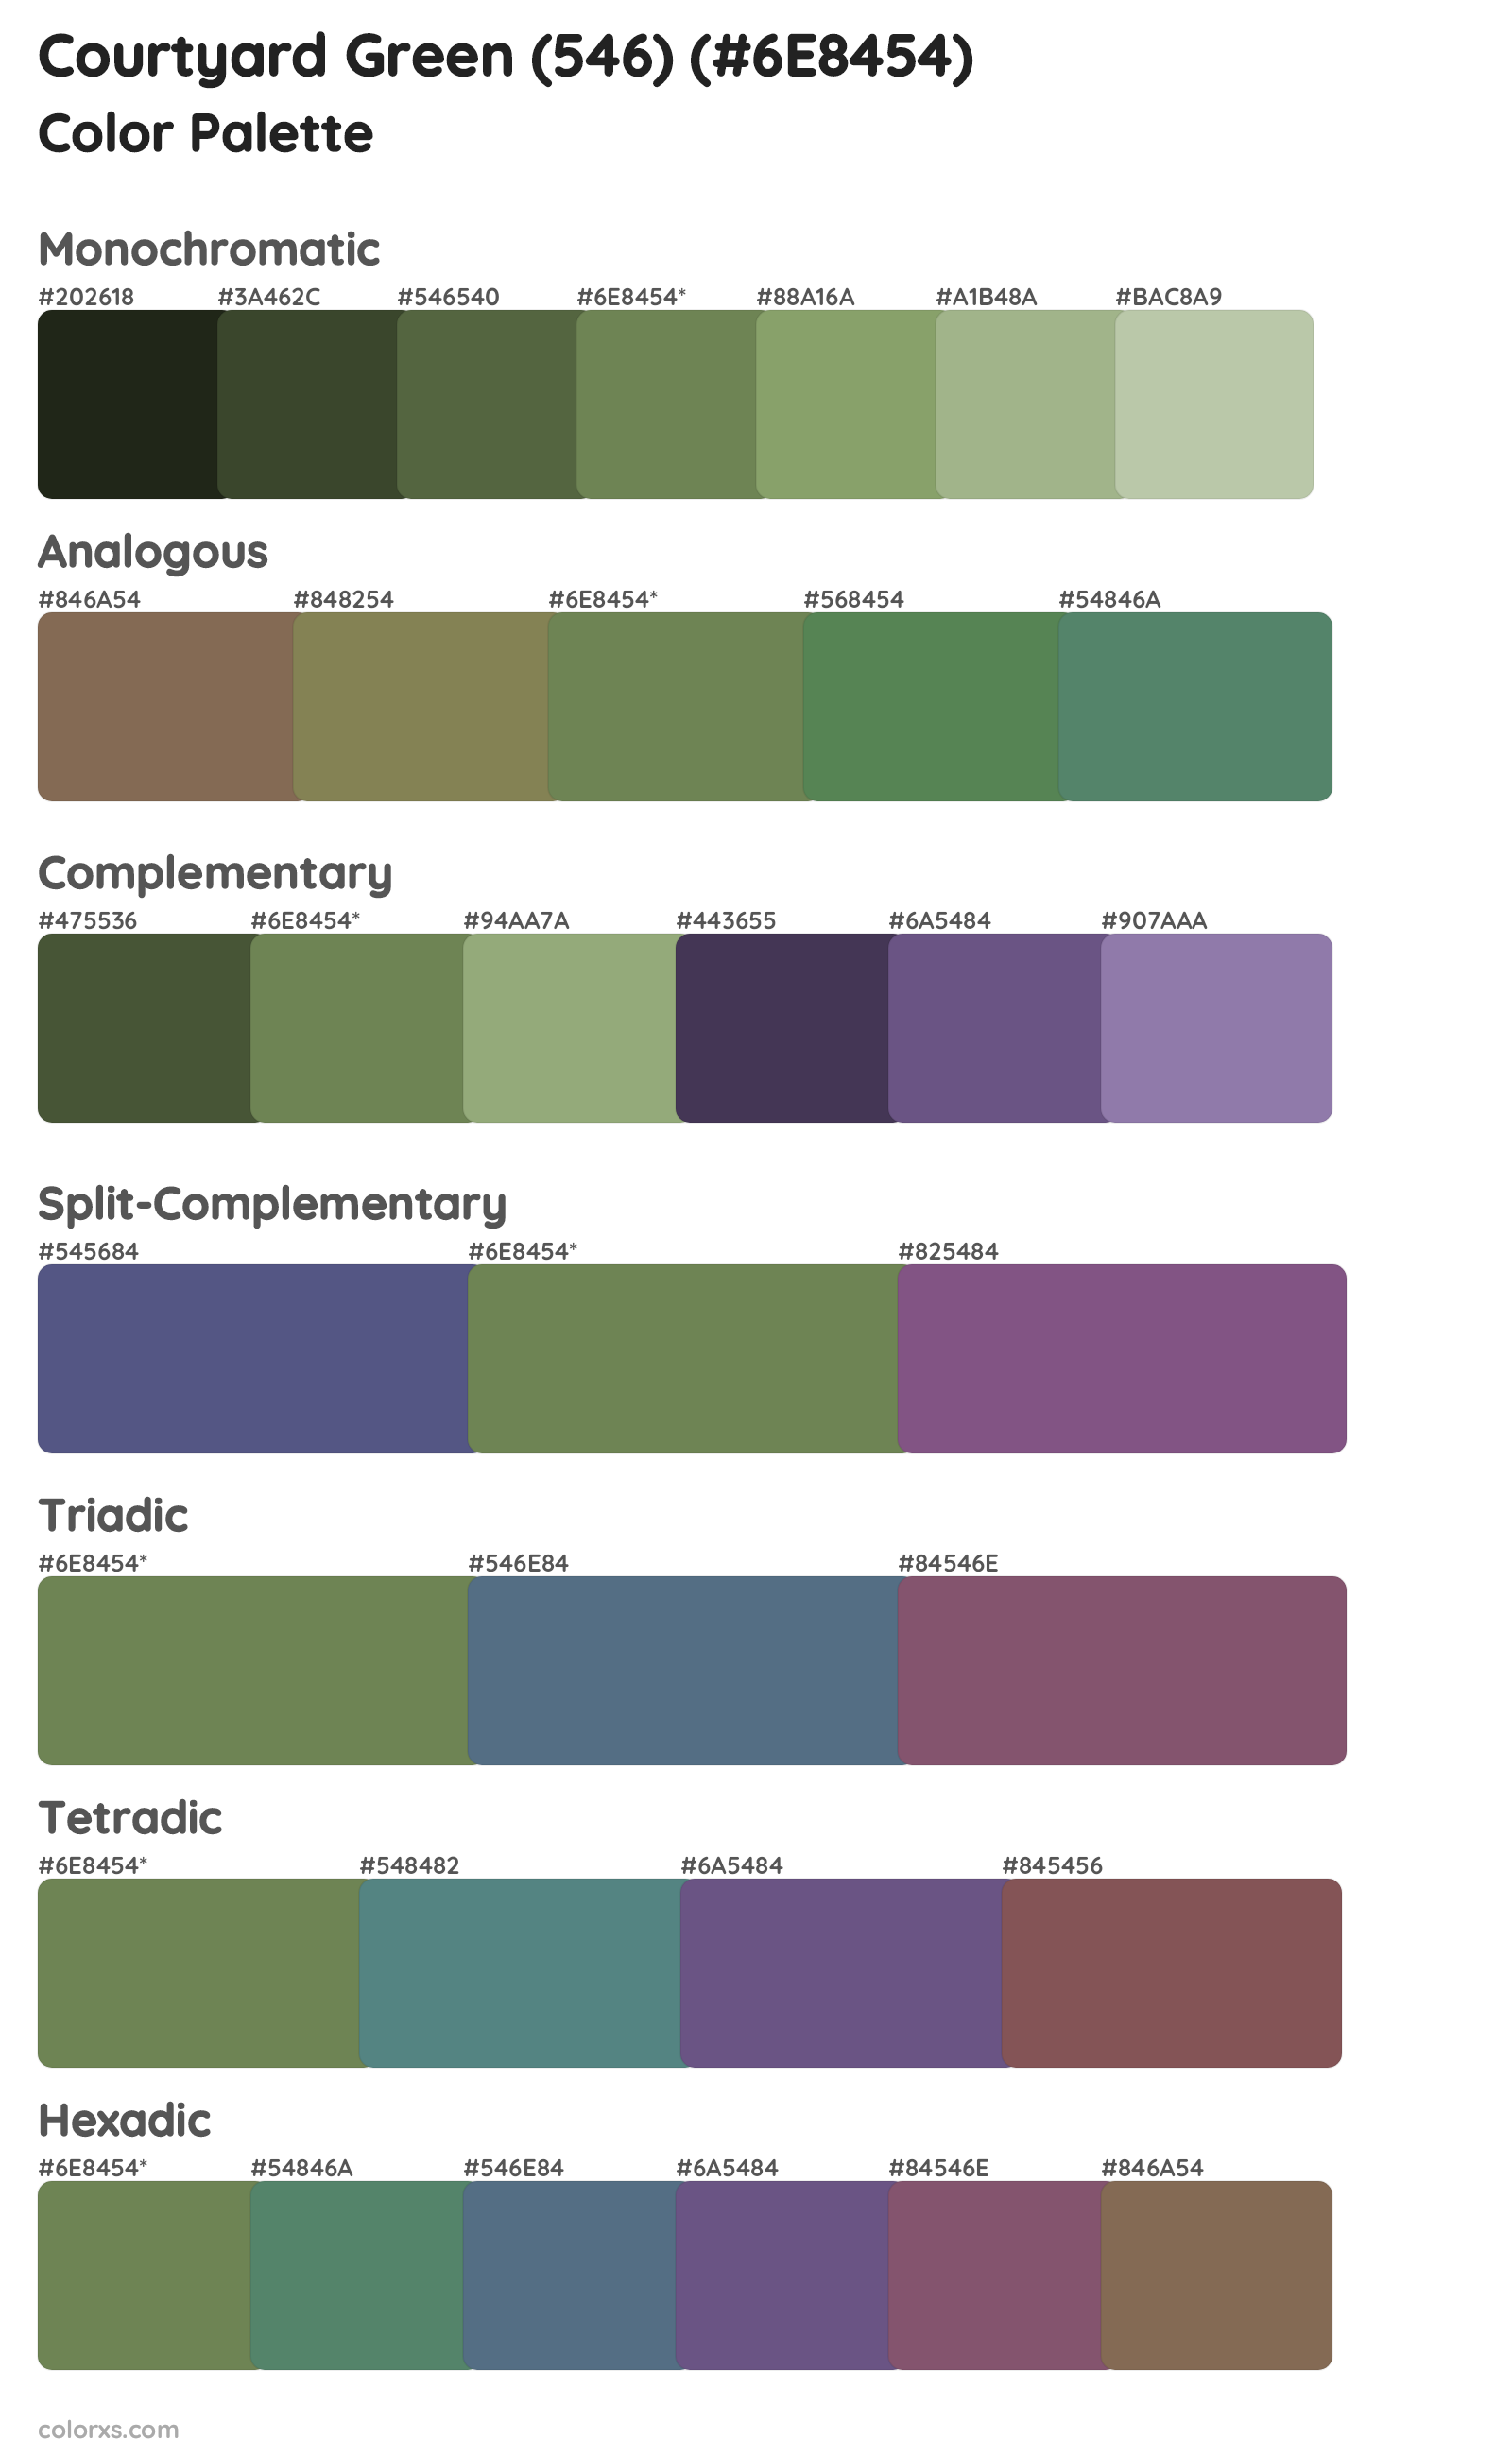 Courtyard Green (546) Color Scheme Palettes